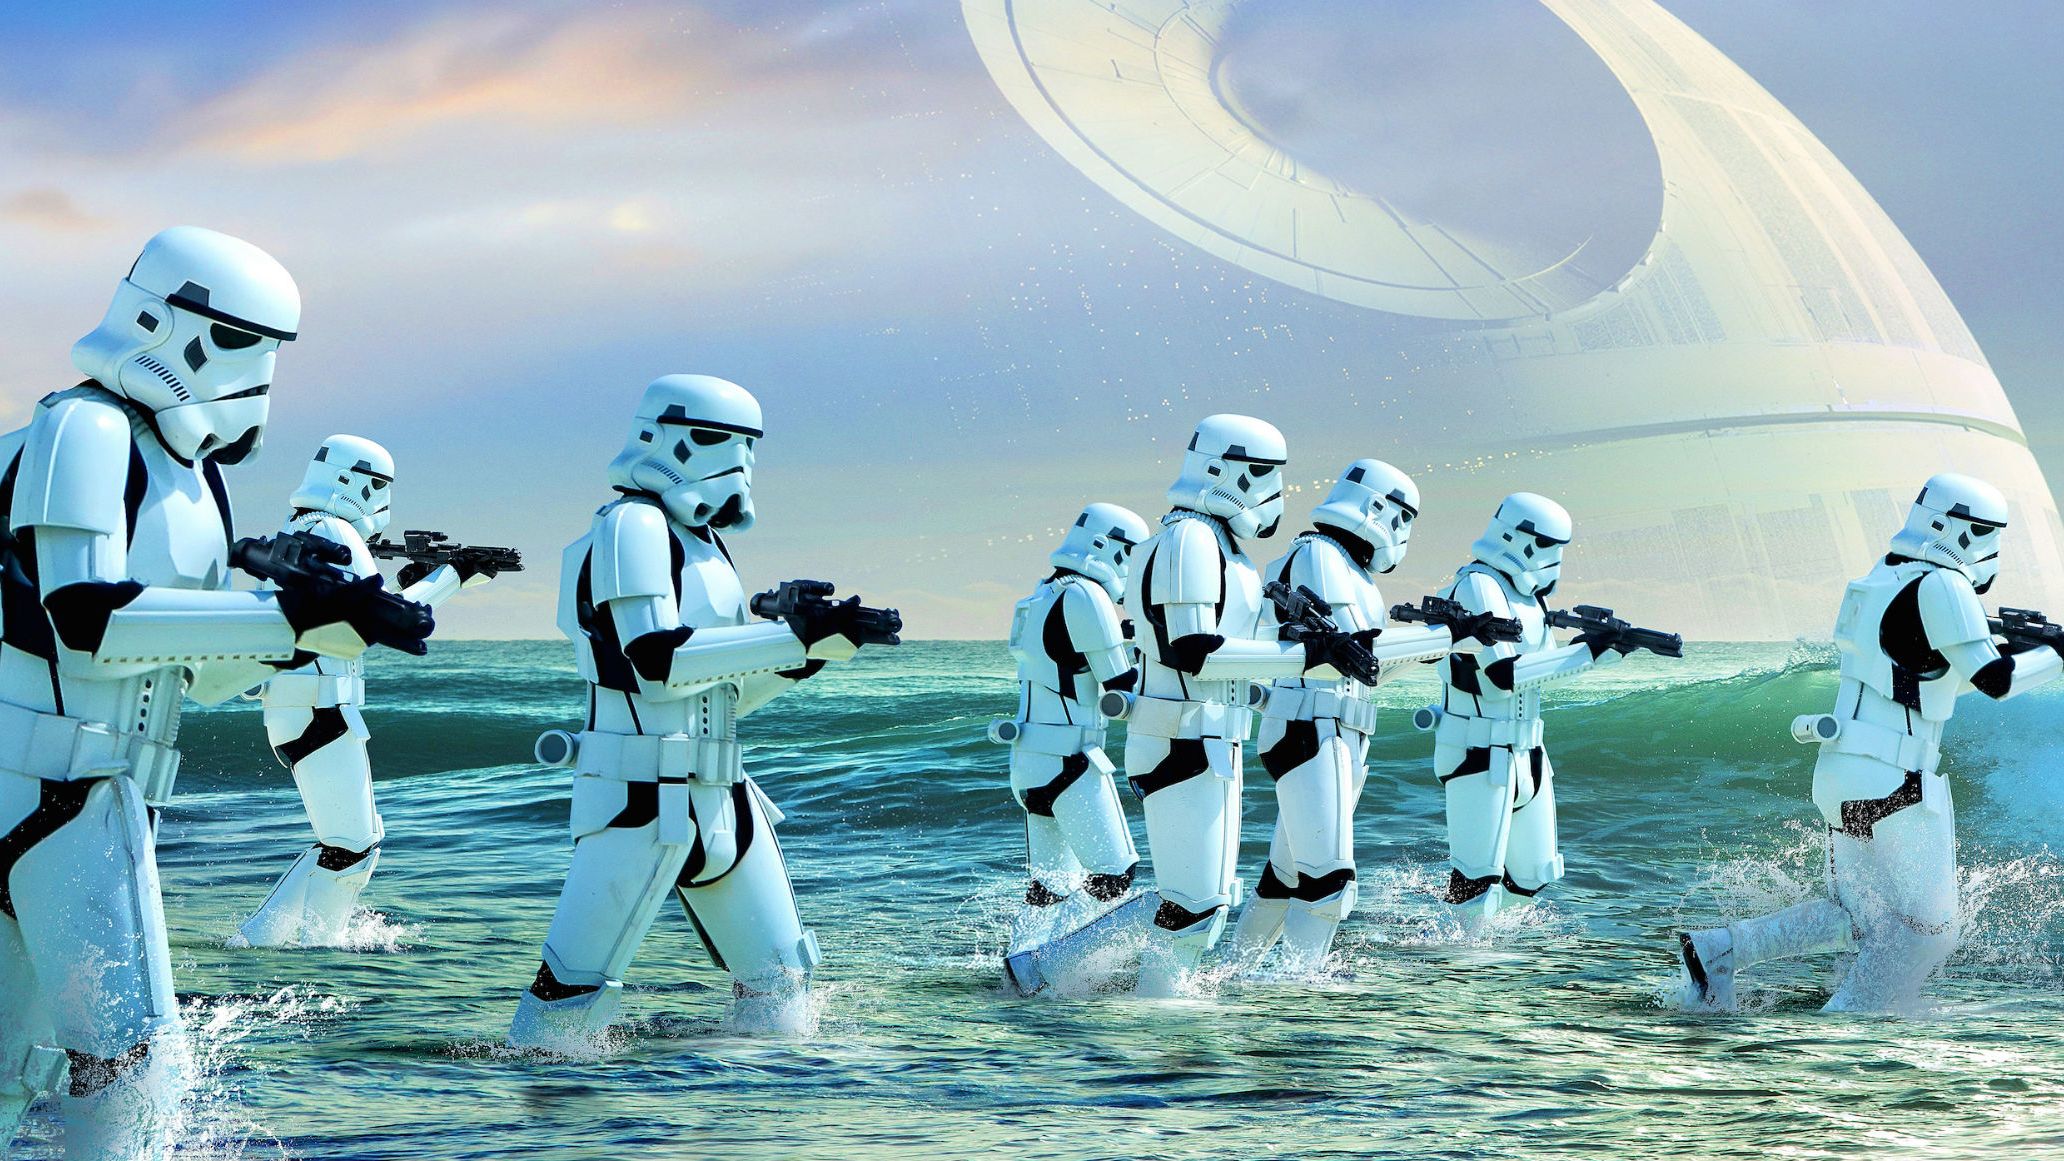 stormtrooper, movie, rogue one: a star wars story, death star, star wars